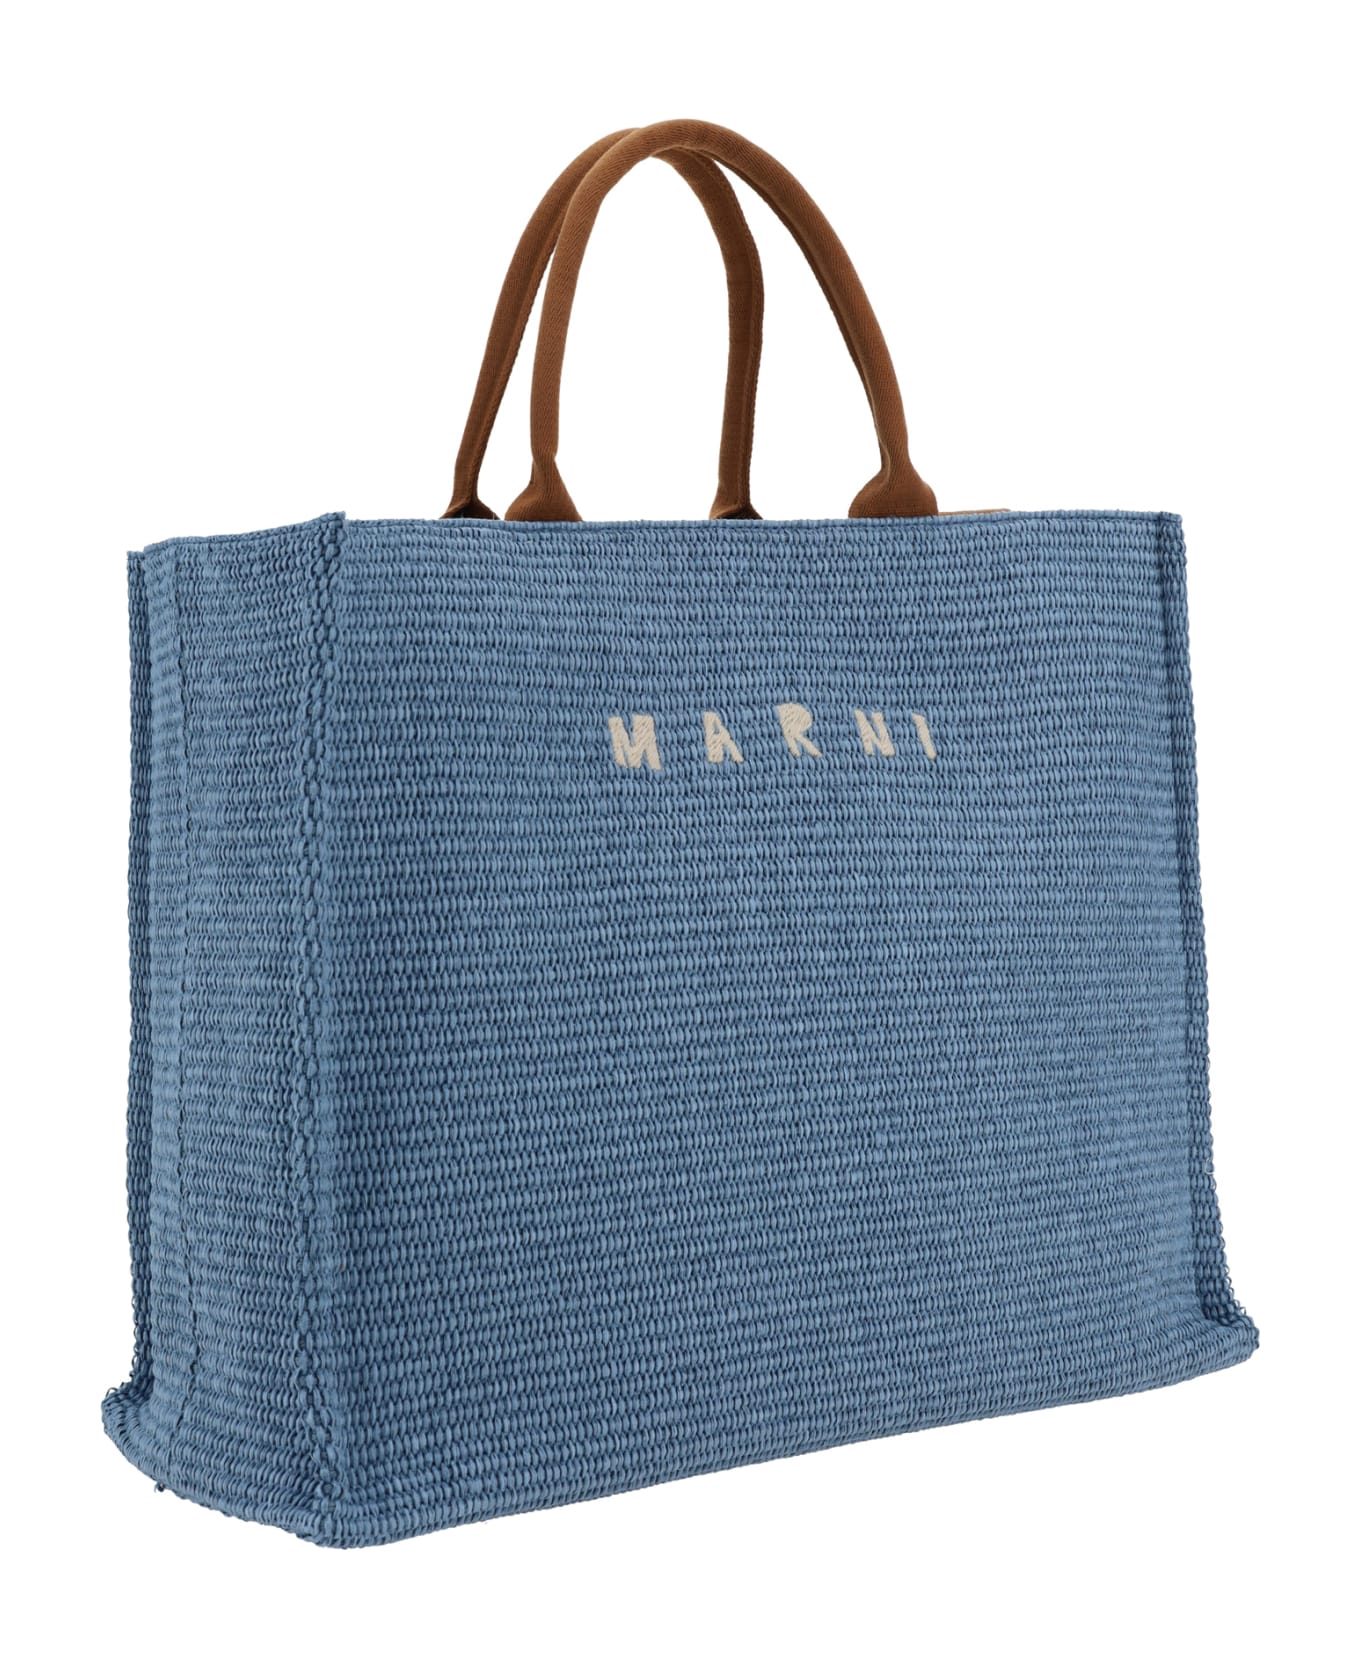 Marni Handbag - Gnawed Blue トートバッグ